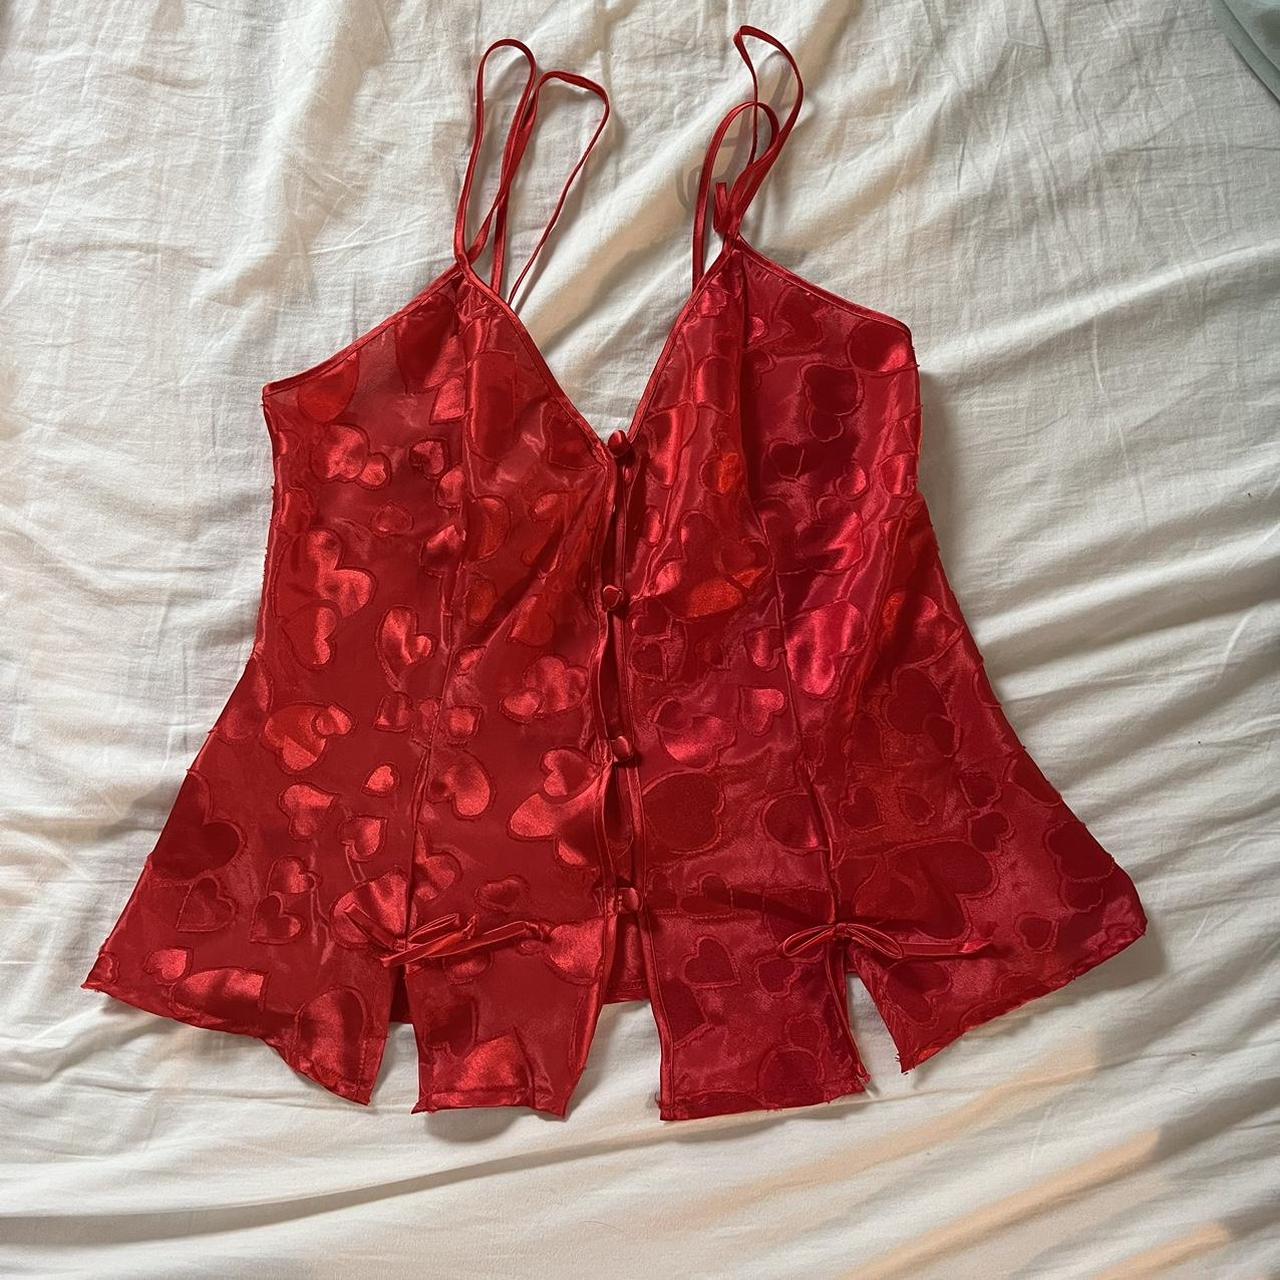 Cinema Red silk/satin heart lingerie cami top🍒 - Depop